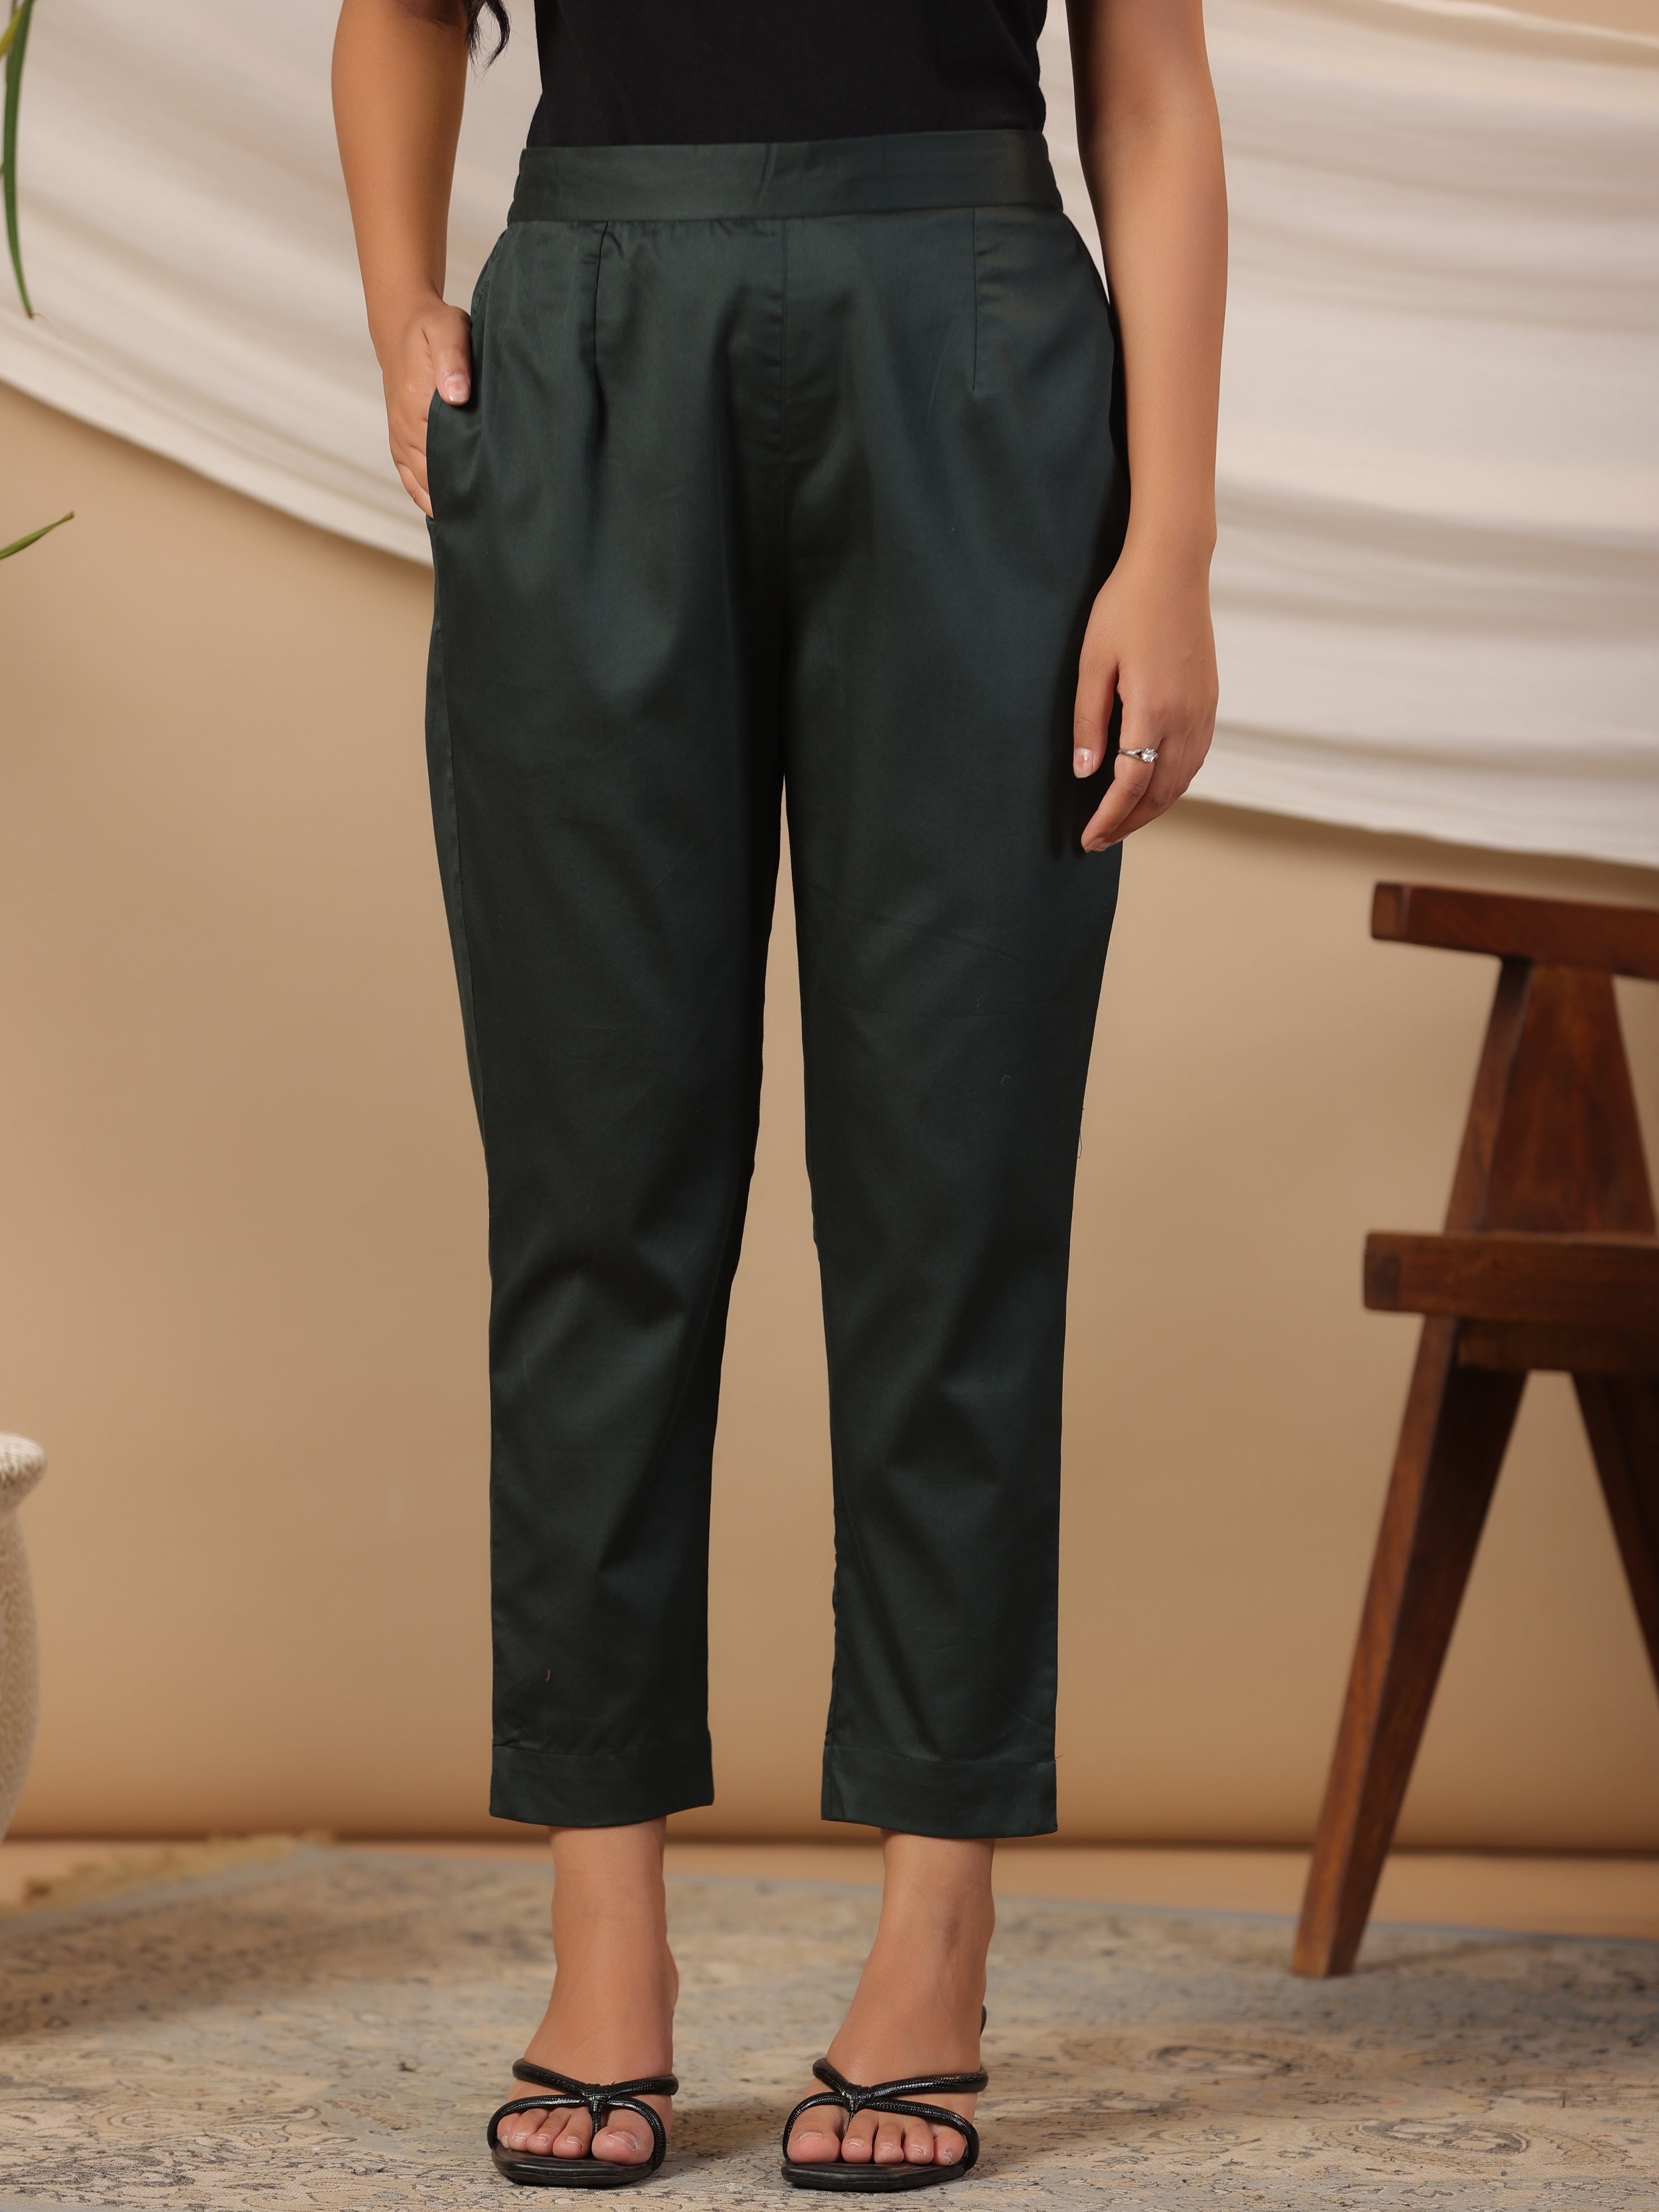 Juniper Jade Green Solid Lycra Women Drawstring Pants With Single Side Pocket